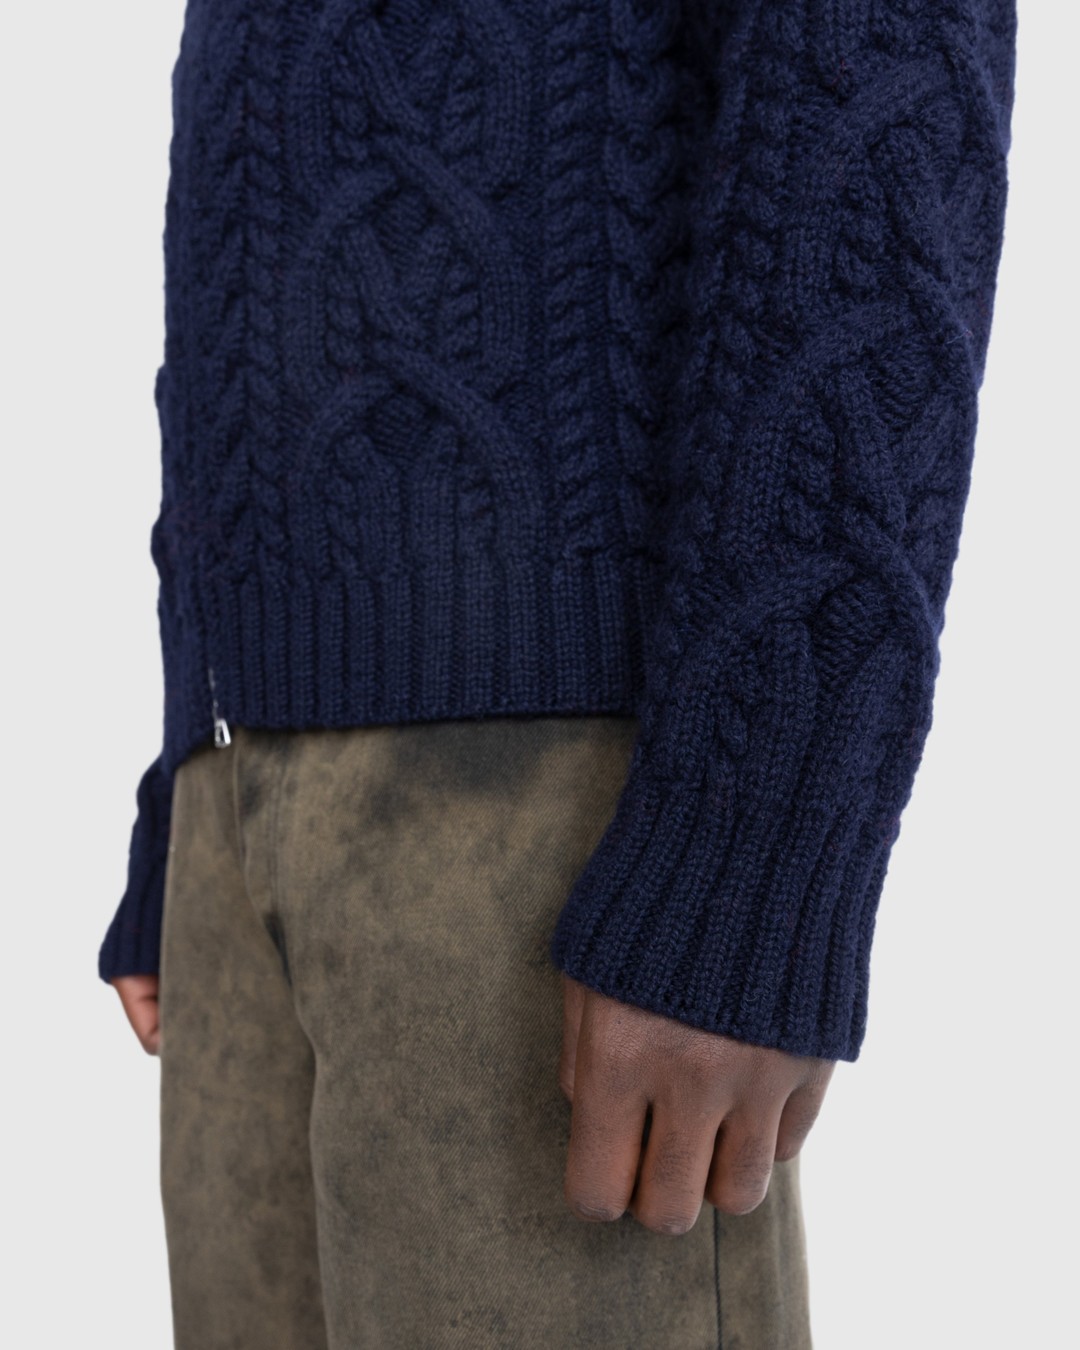 Dries van Noten – Naldo Cardigan Blue - Knitwear - Blue - Image 5